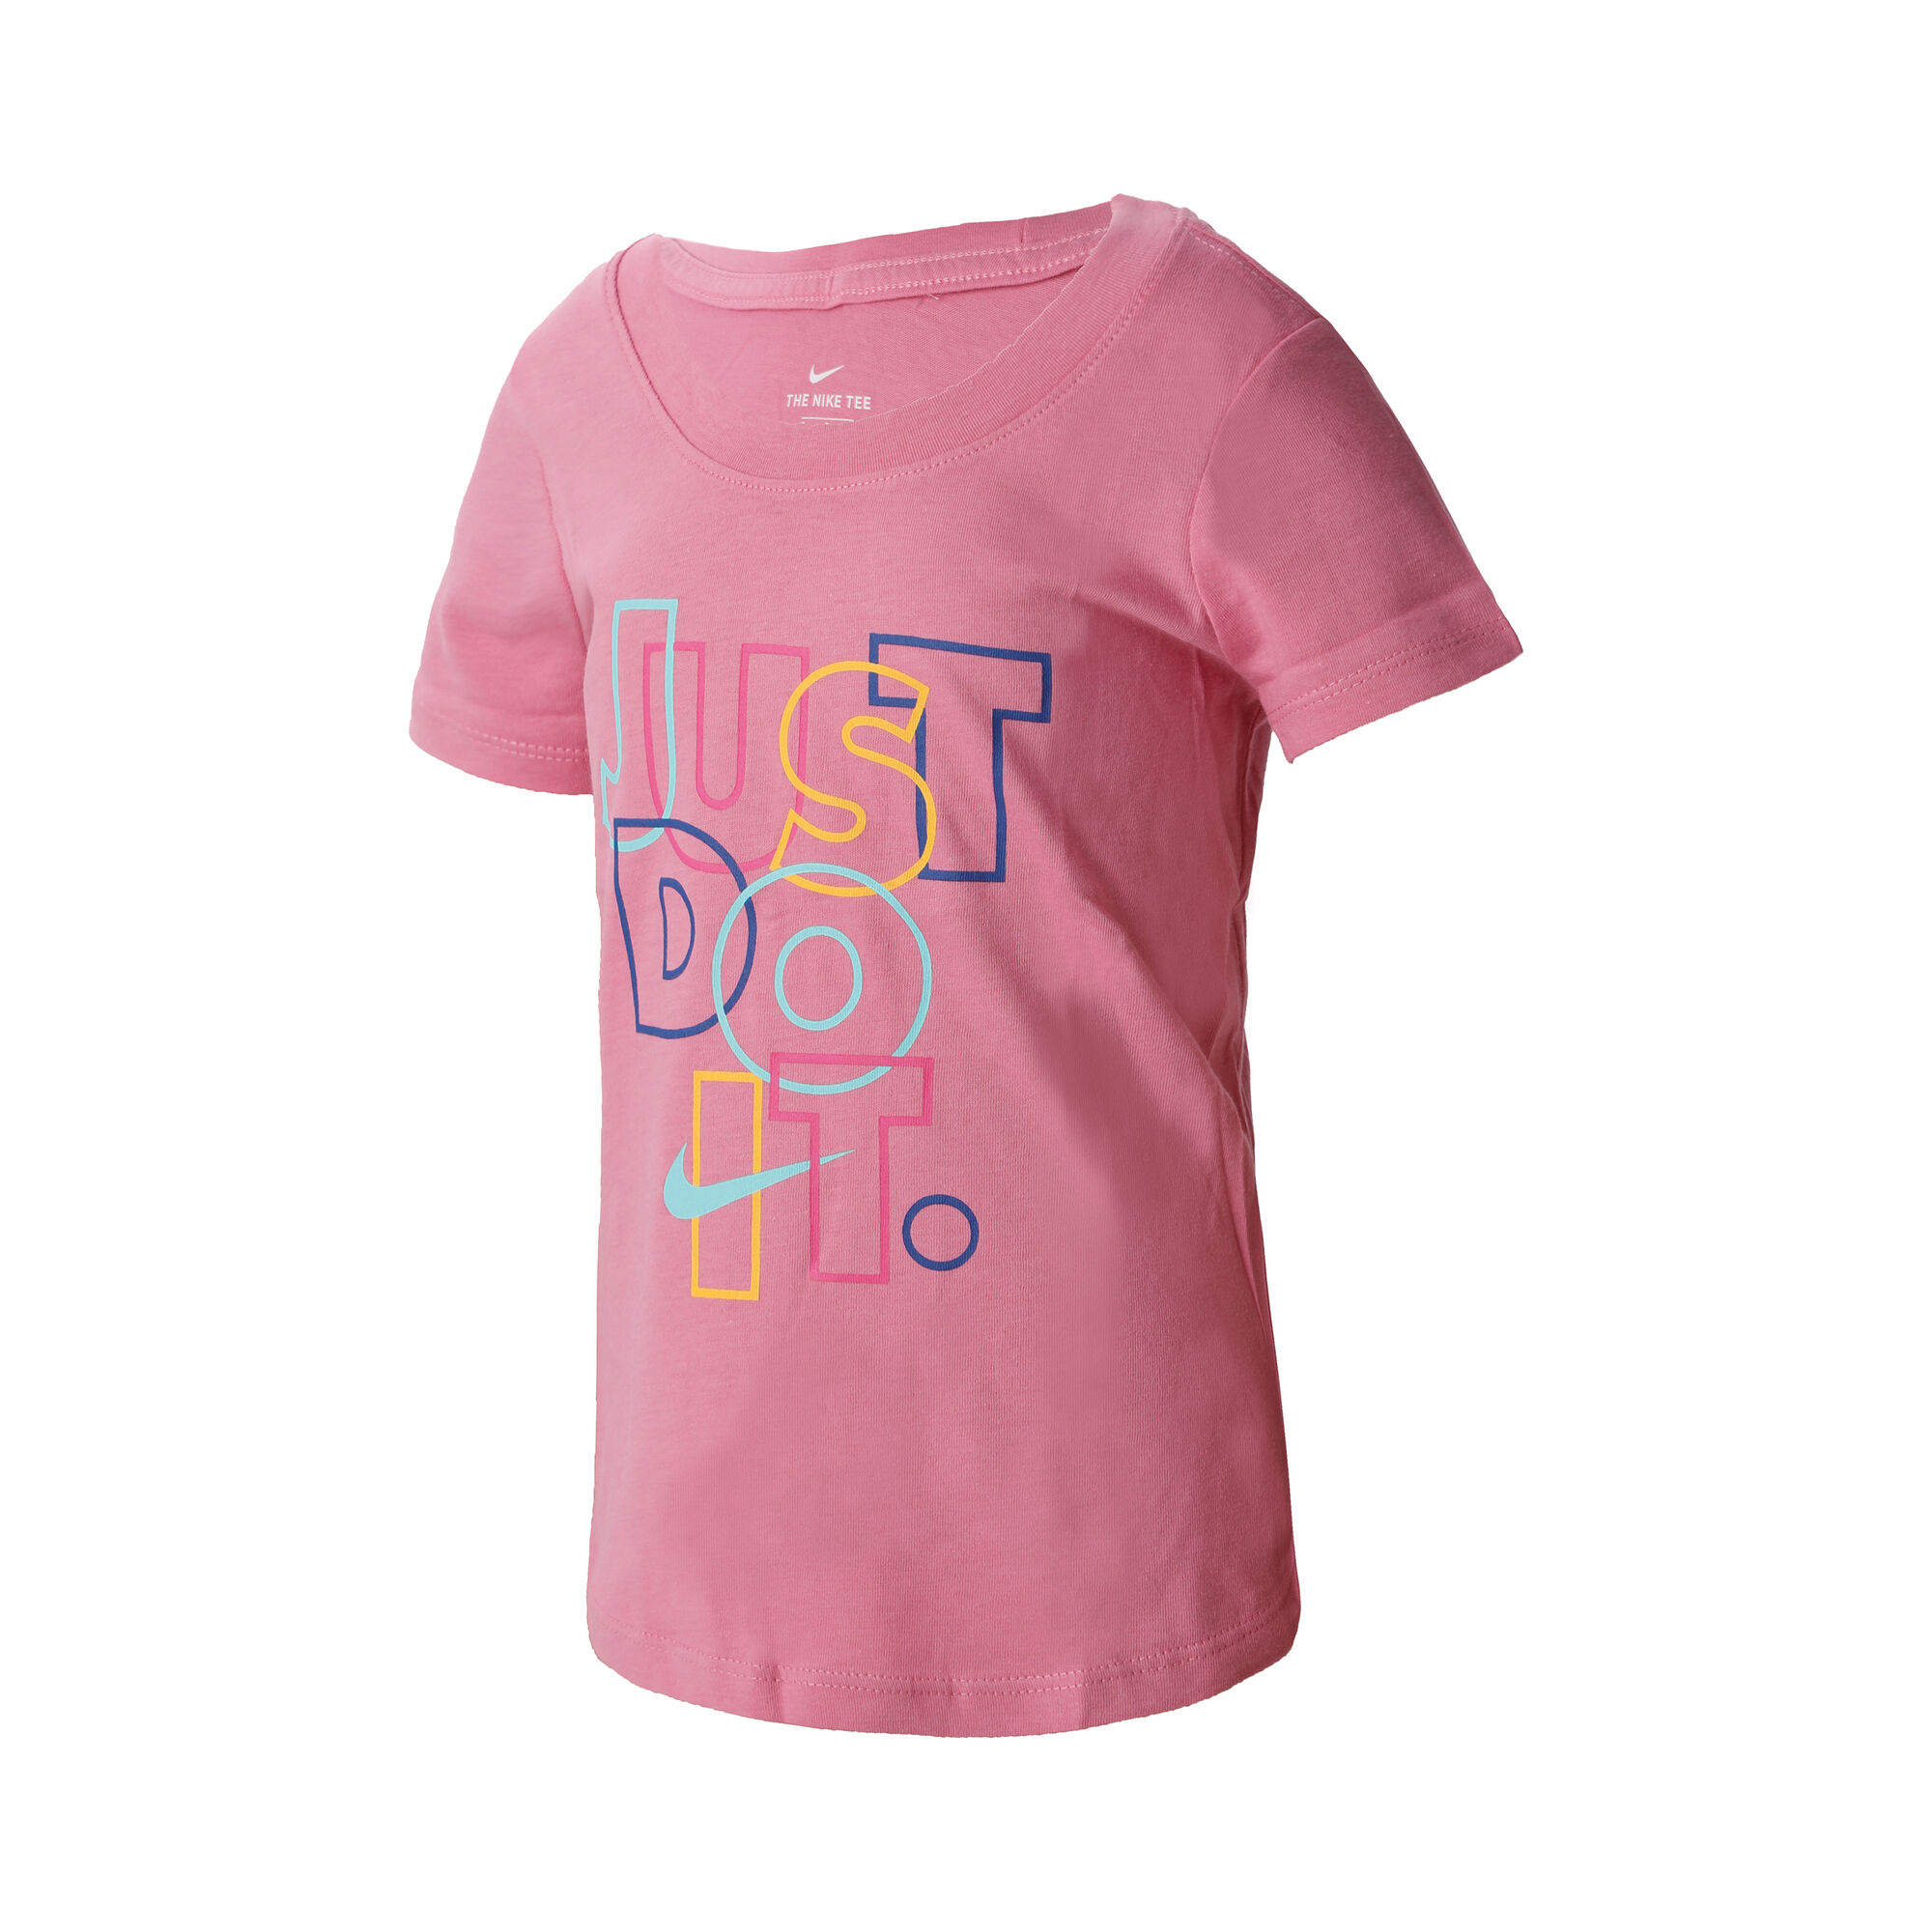 Nike Sportswear Just Do It Camiseta De Manga Corta Chicas Rosa, Multicolor compra online | Tennis-Point